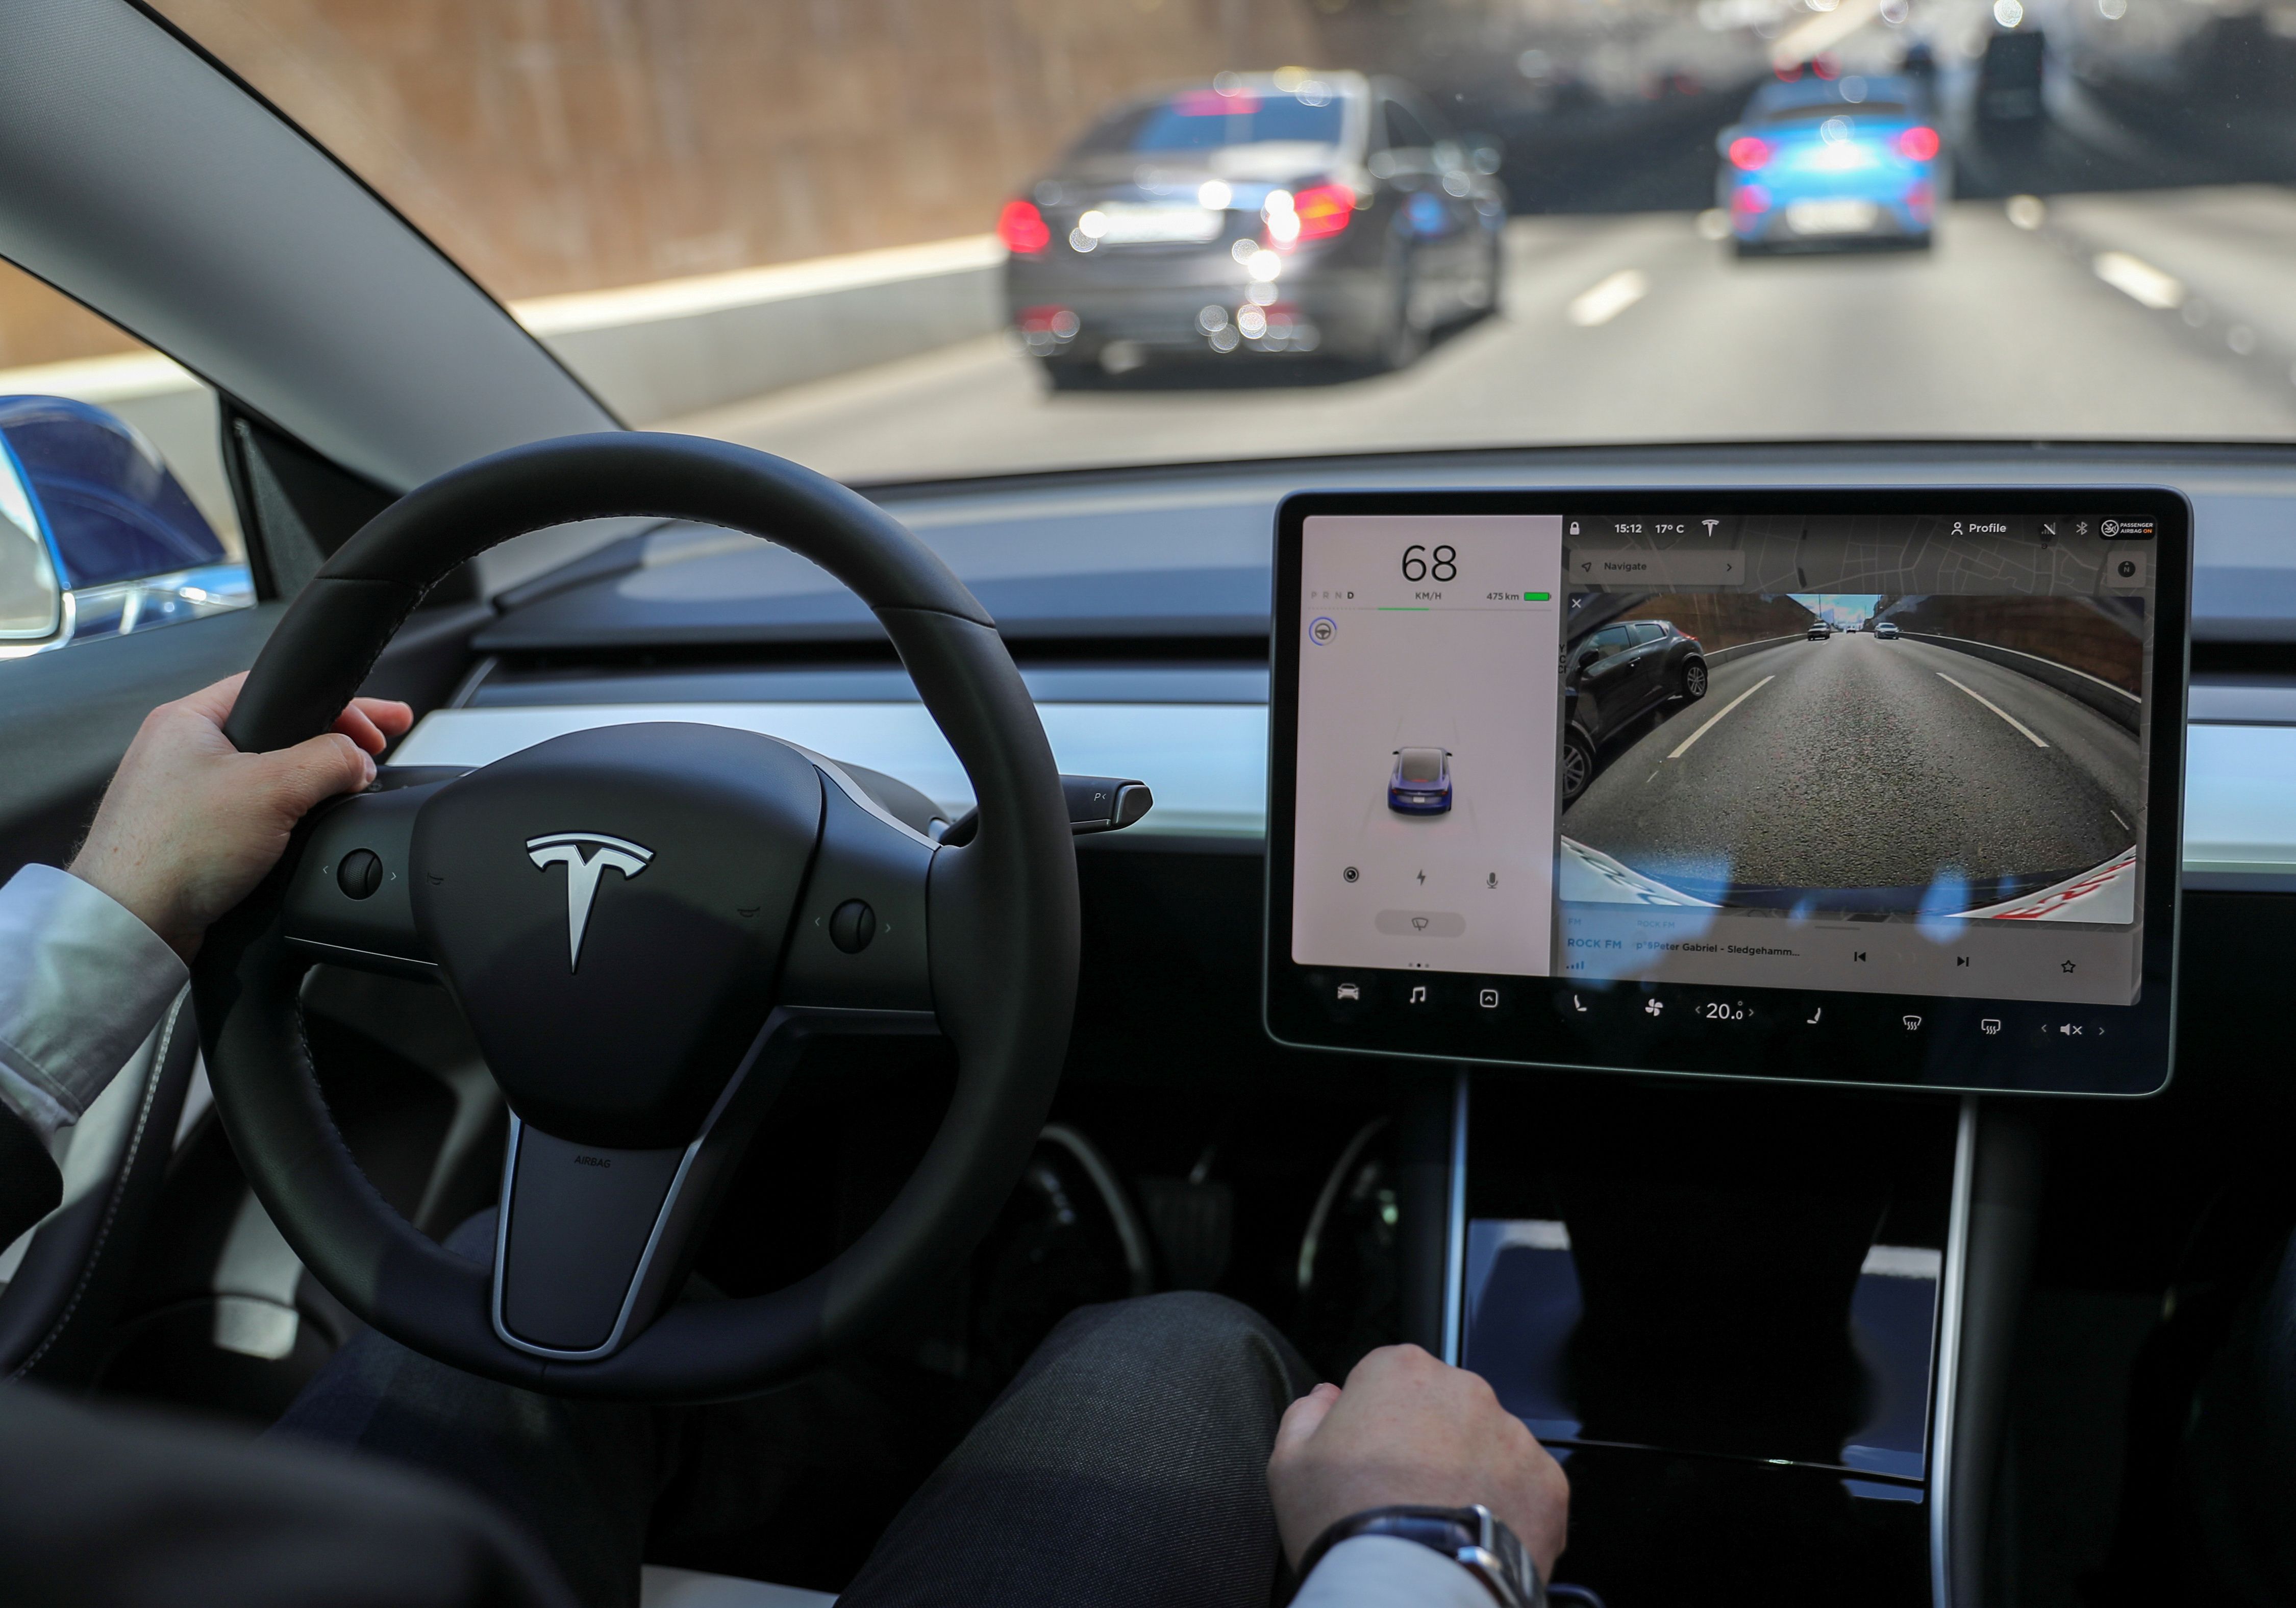 2020 Tesla Model 3 Interior